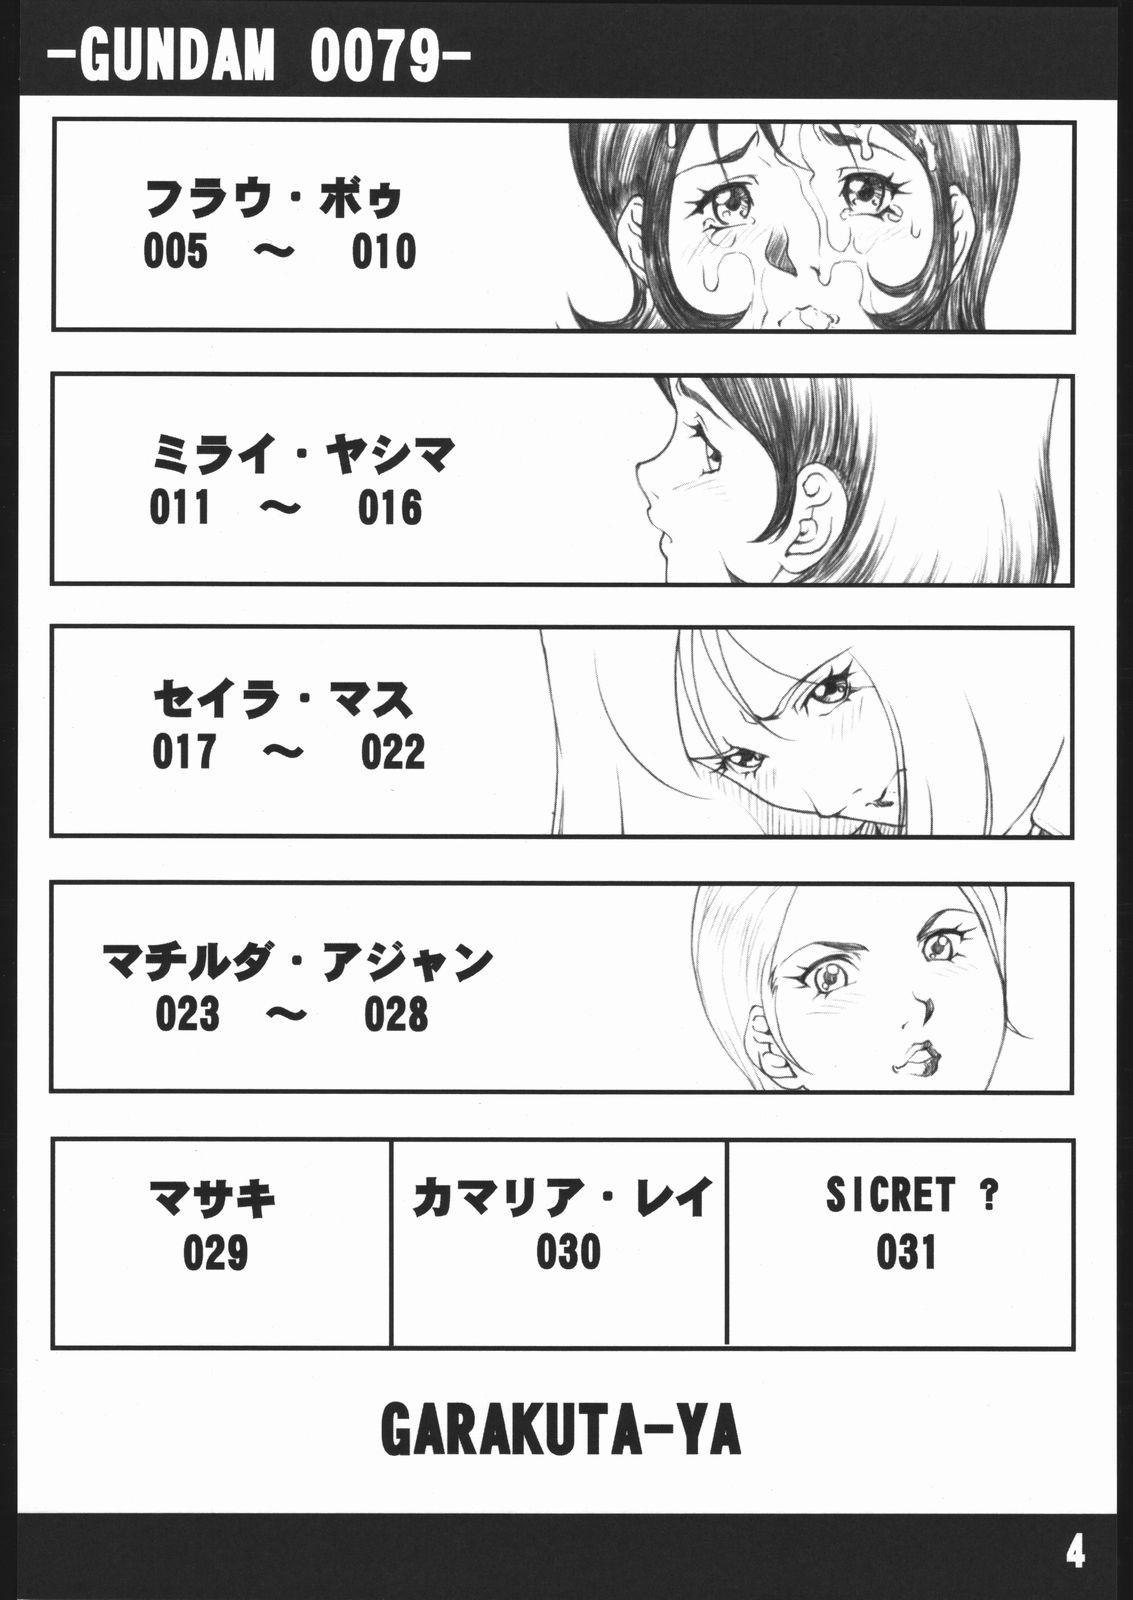 Club Gundam 0079-V1&2 - Mobile suit gundam Negao - Page 3